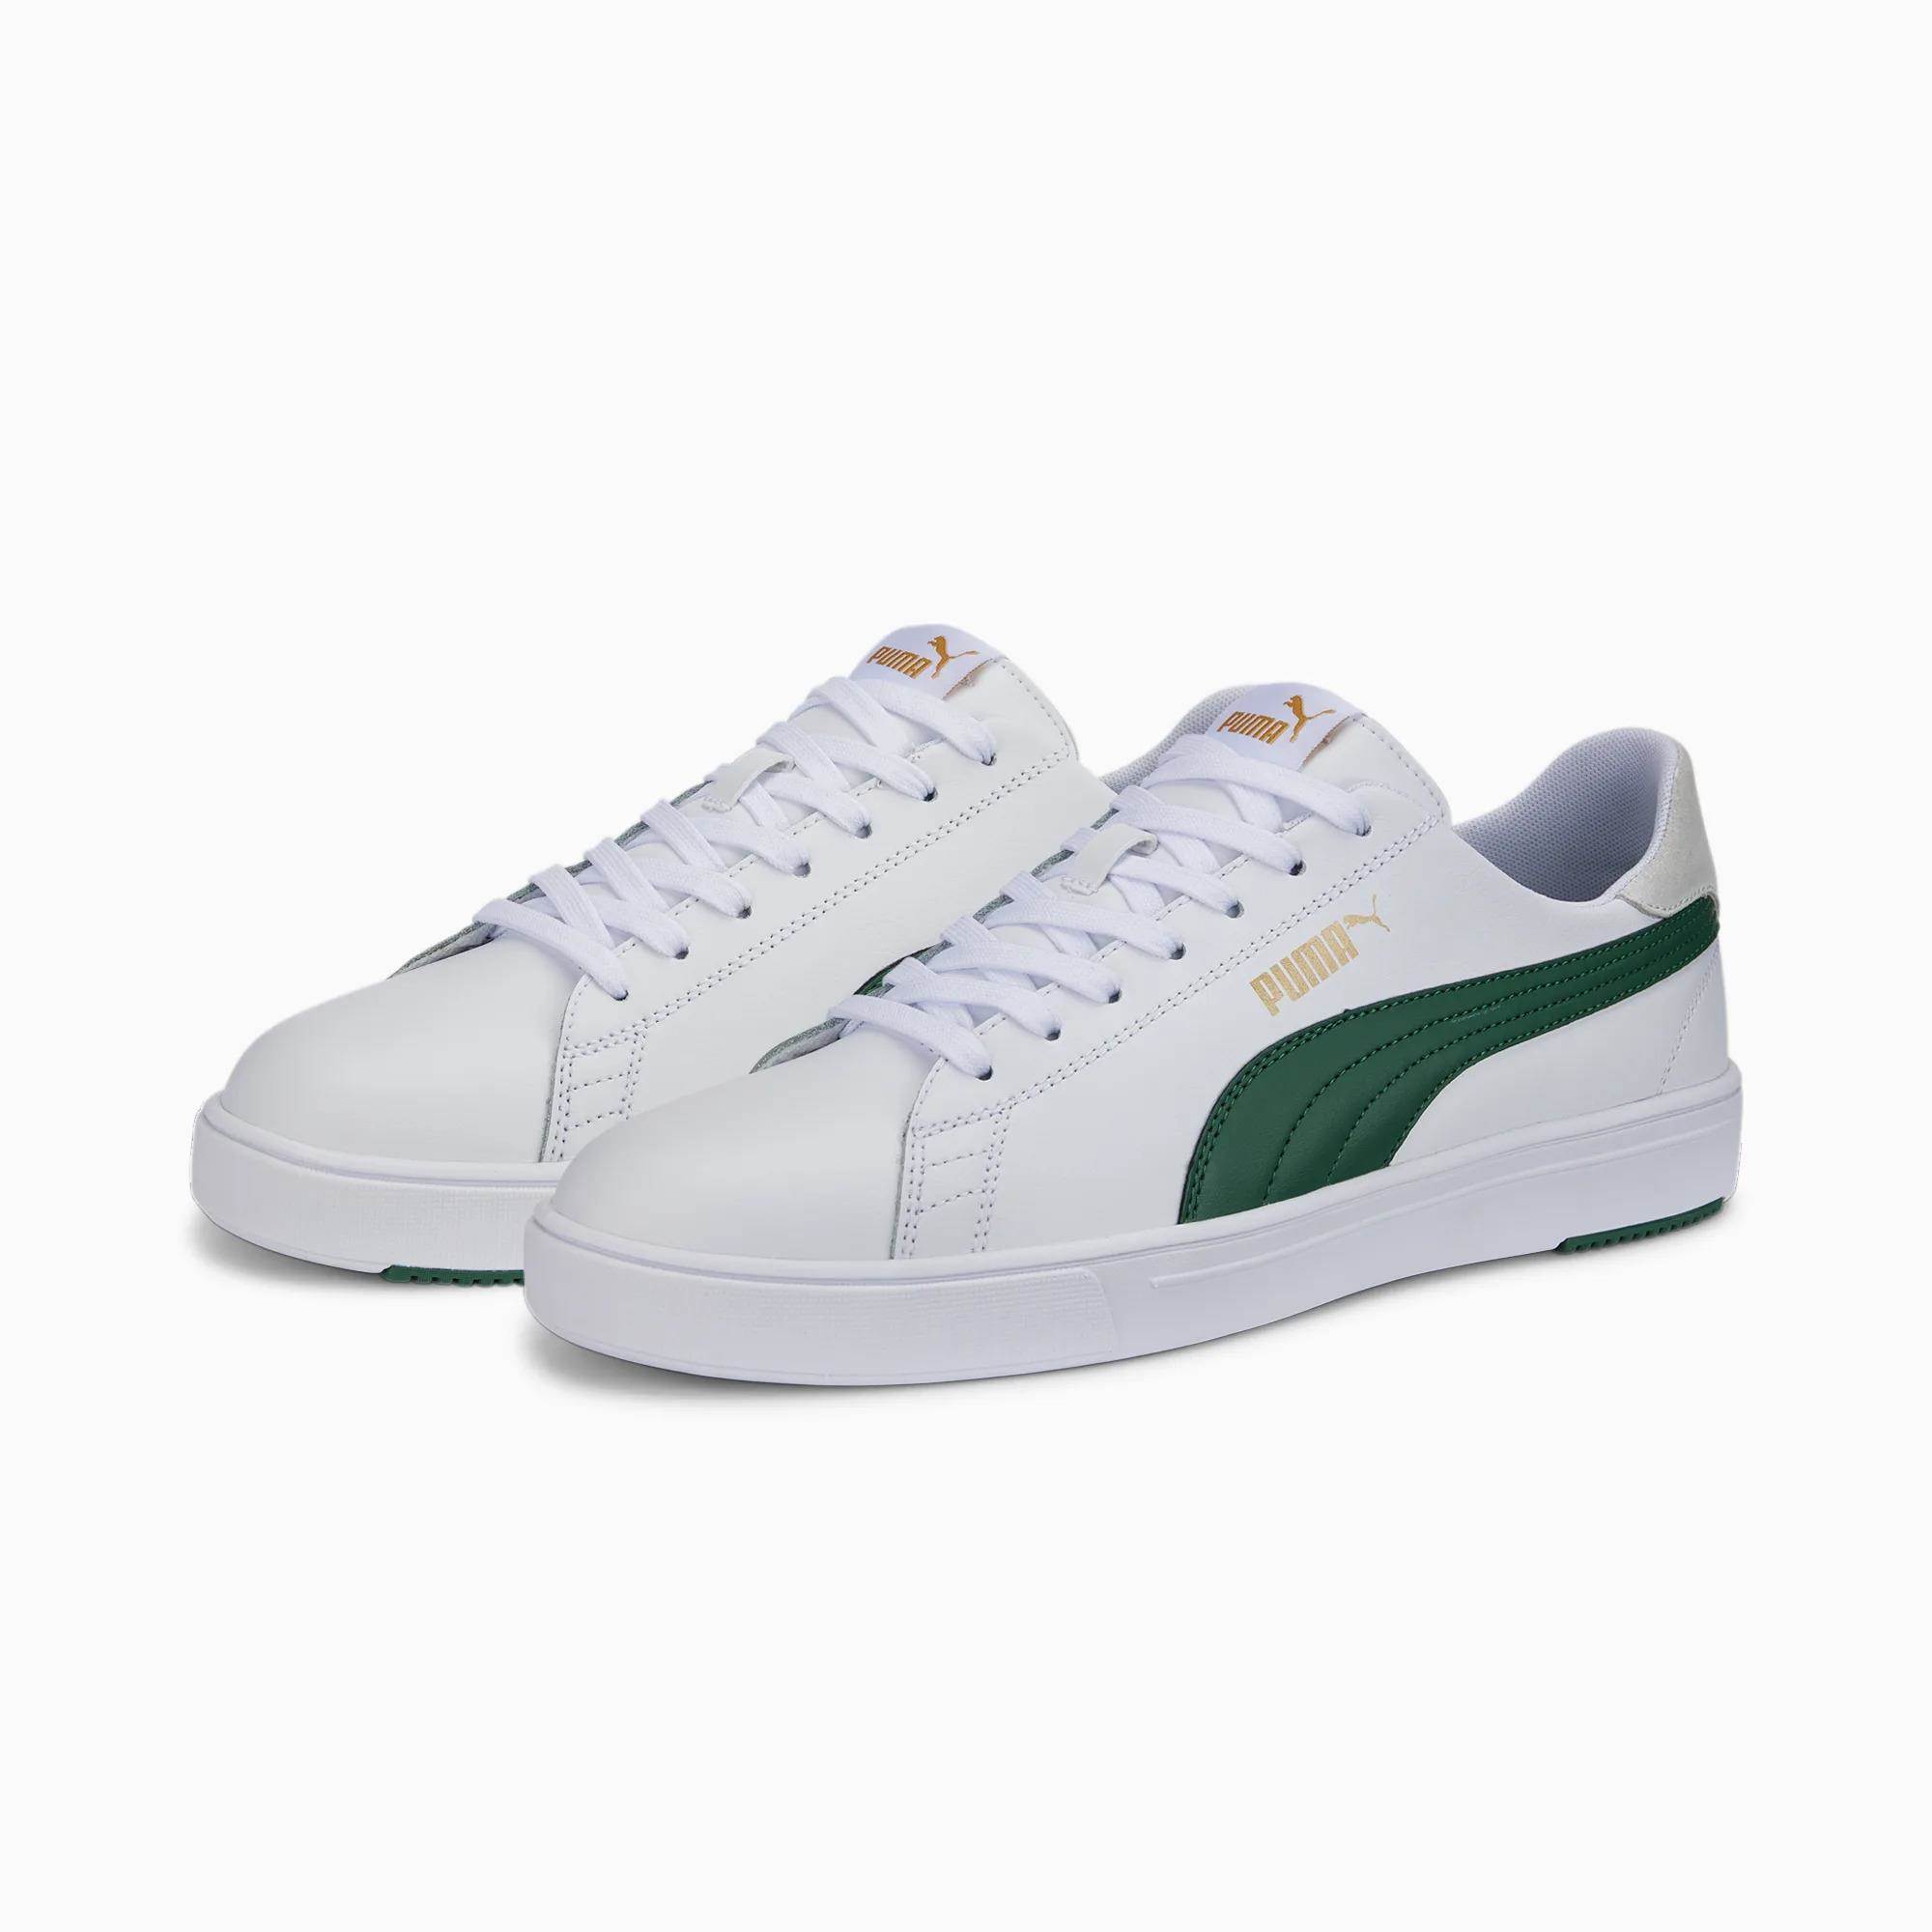 Puma Brand Men's Serve Pro Lite Sneakers Shoes 374902 01 (White/Green ...